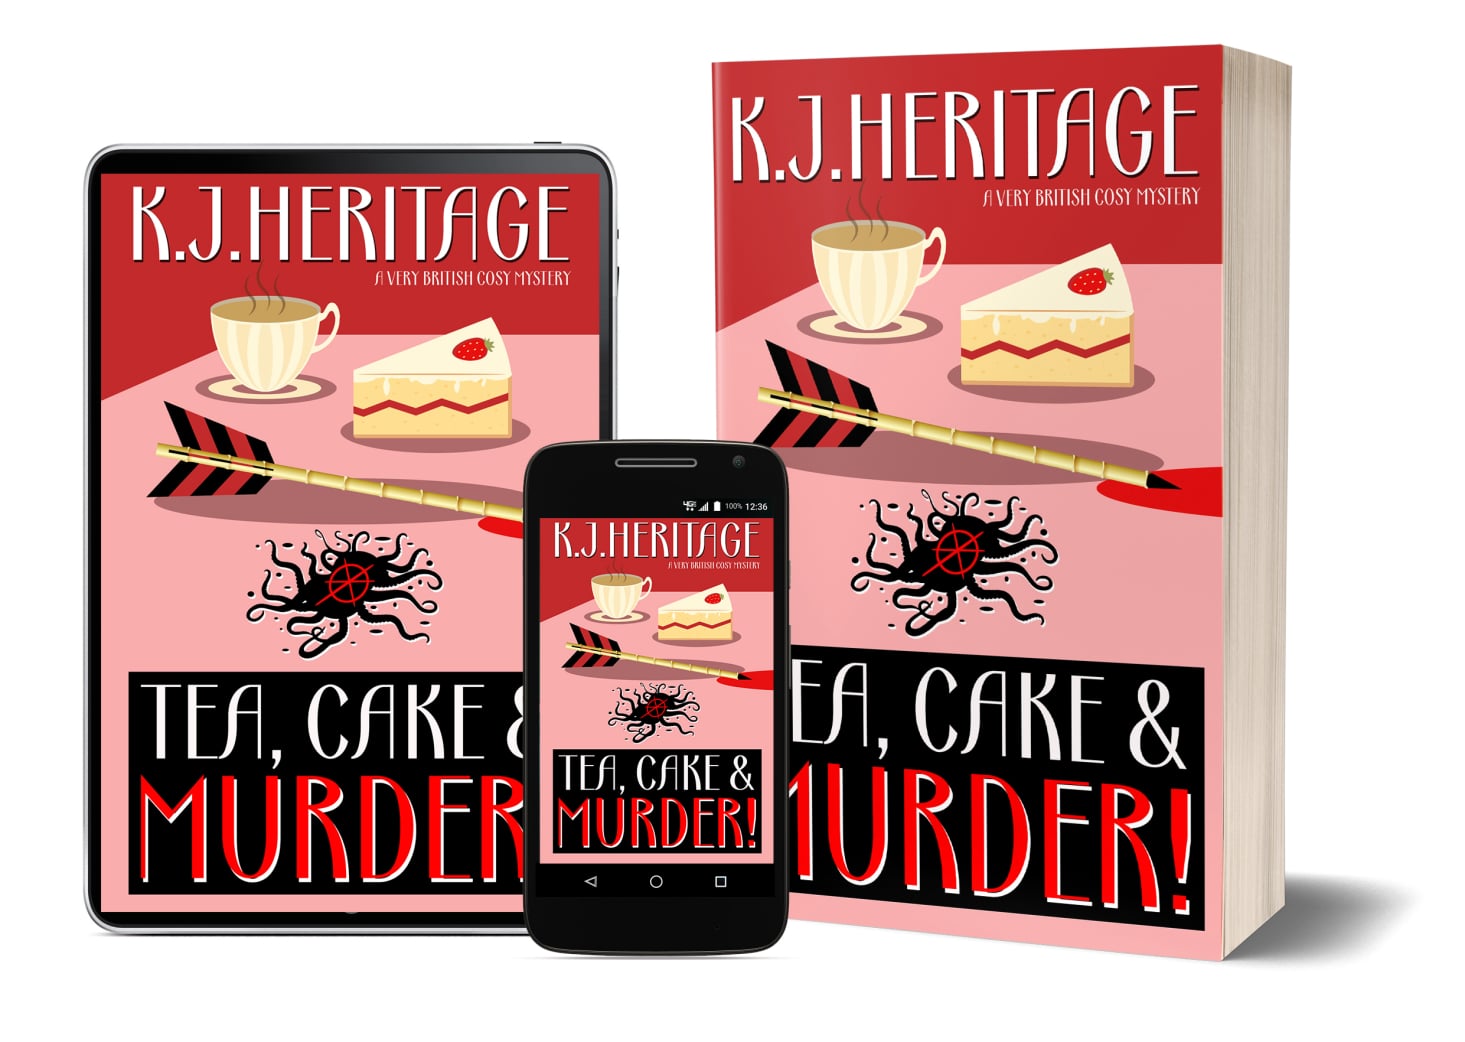 Tea, Cake and Murder!